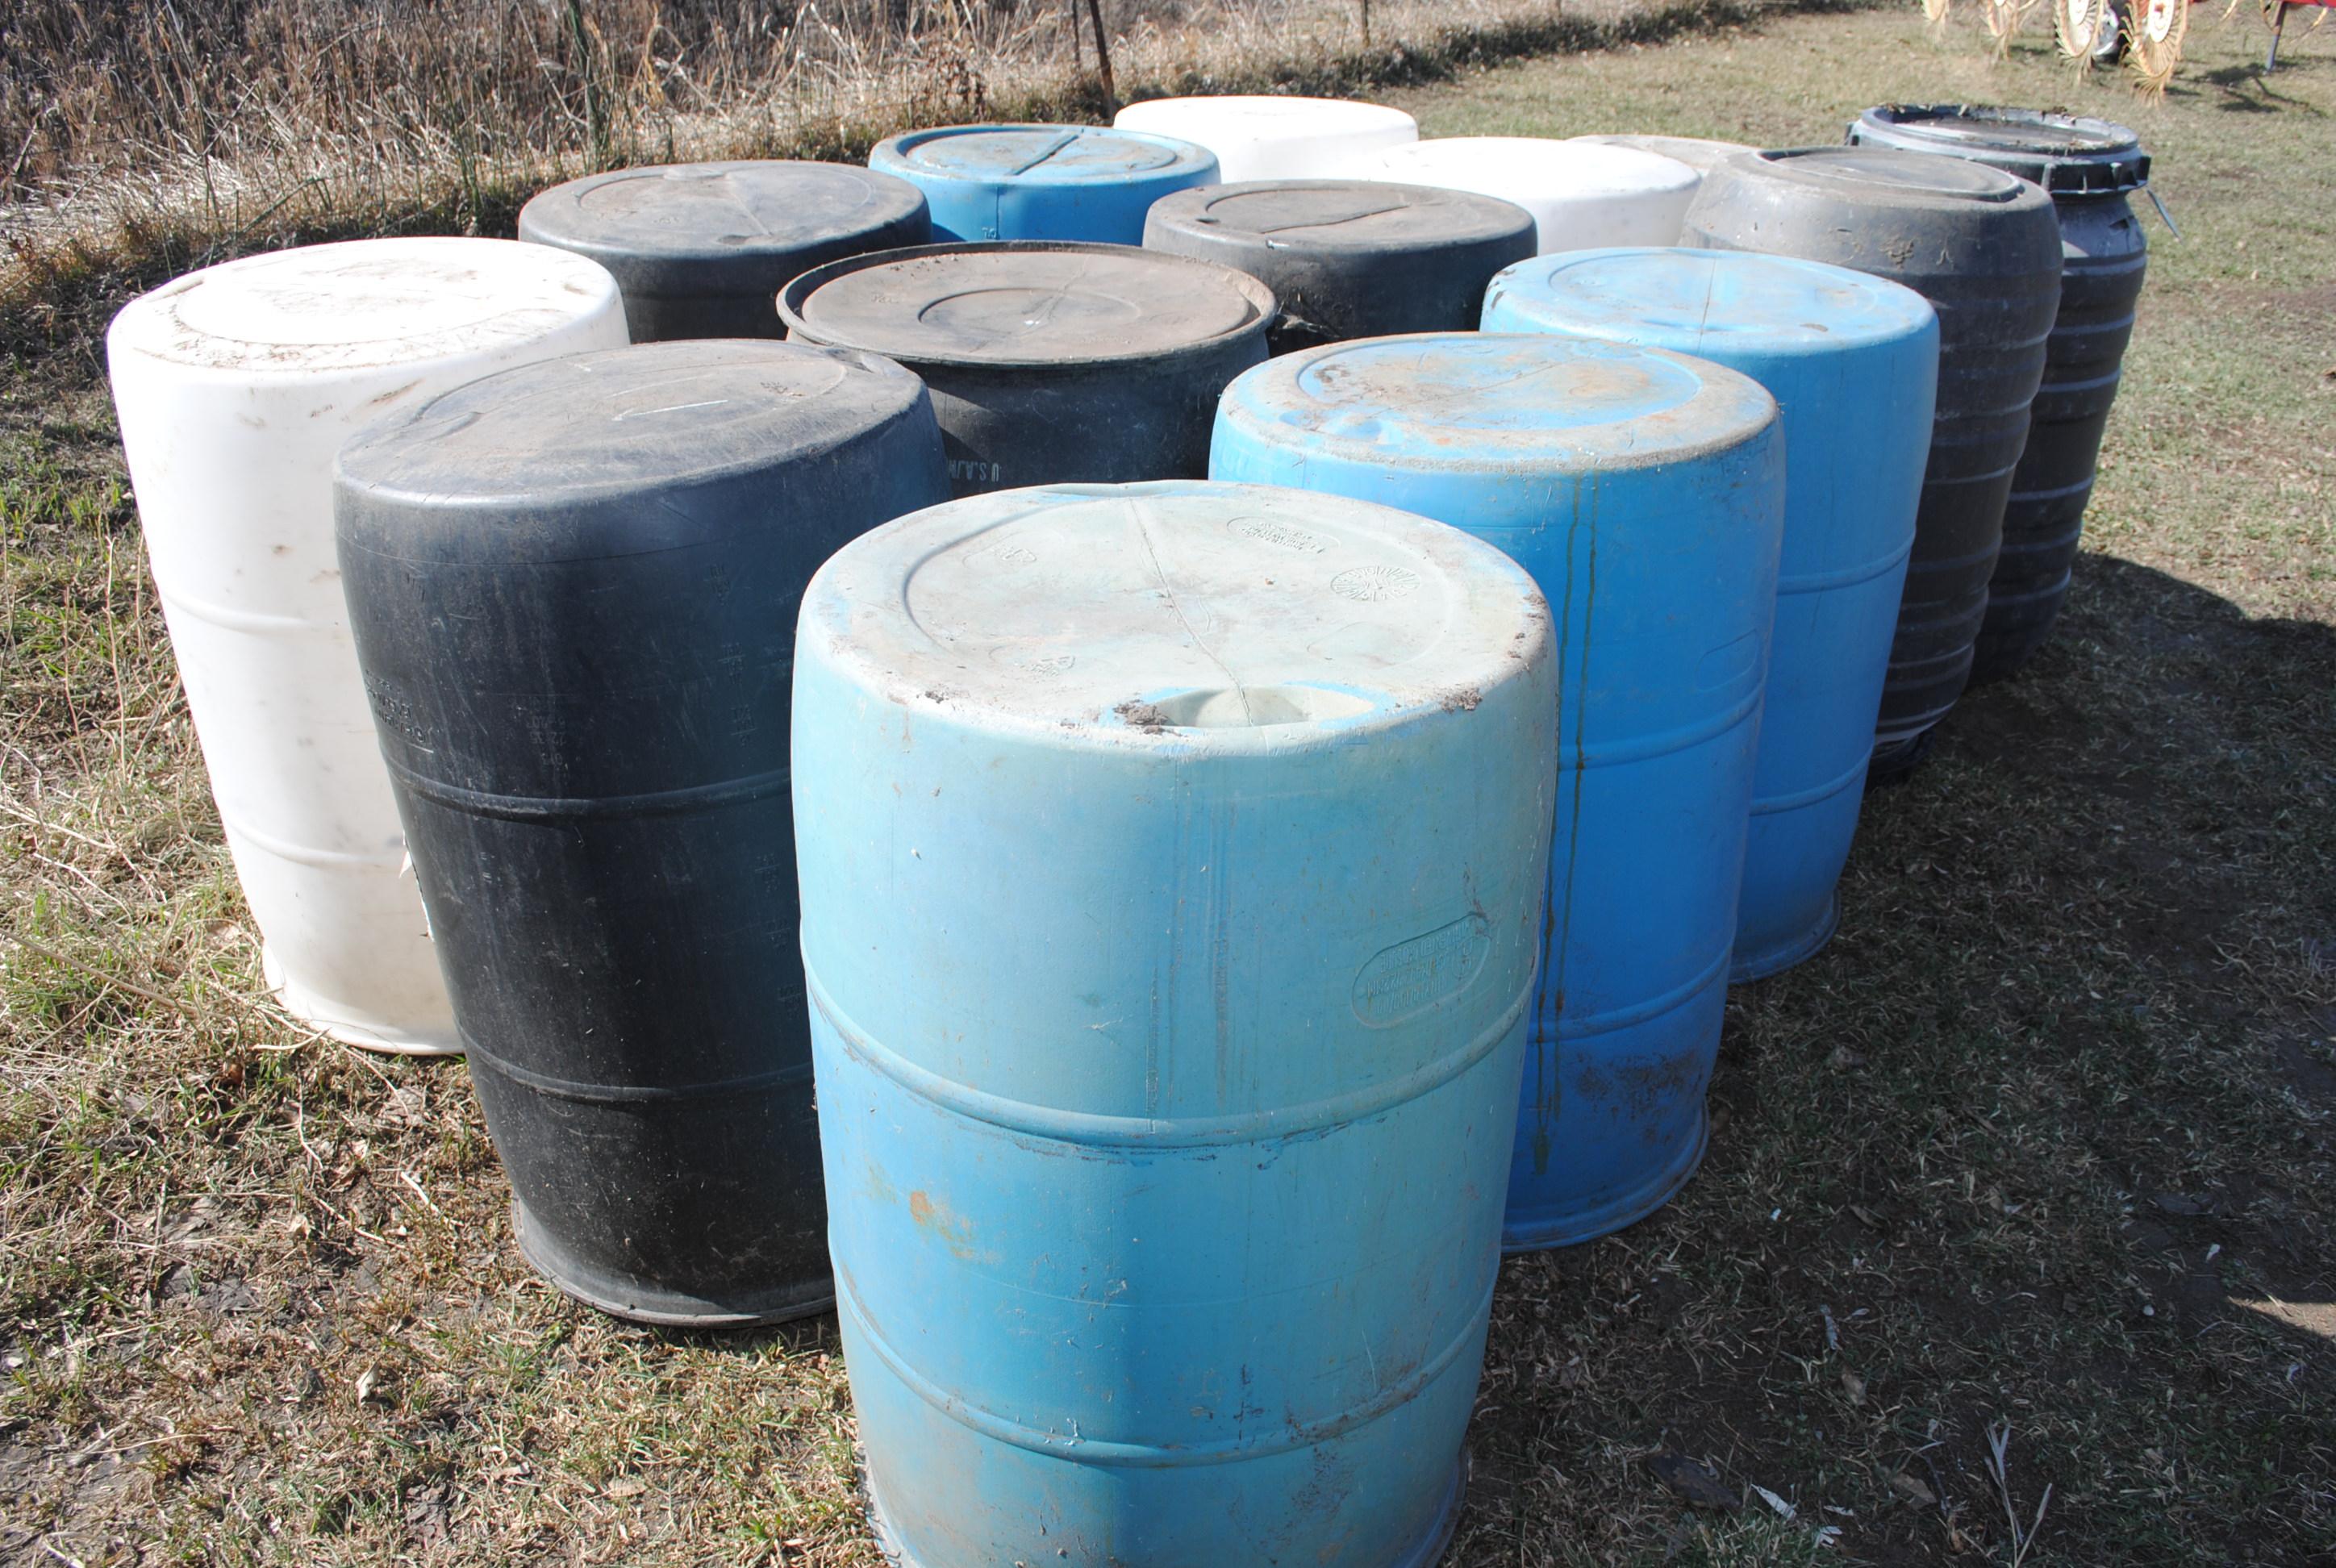 14 Plastic Barrels (sells as one lot)